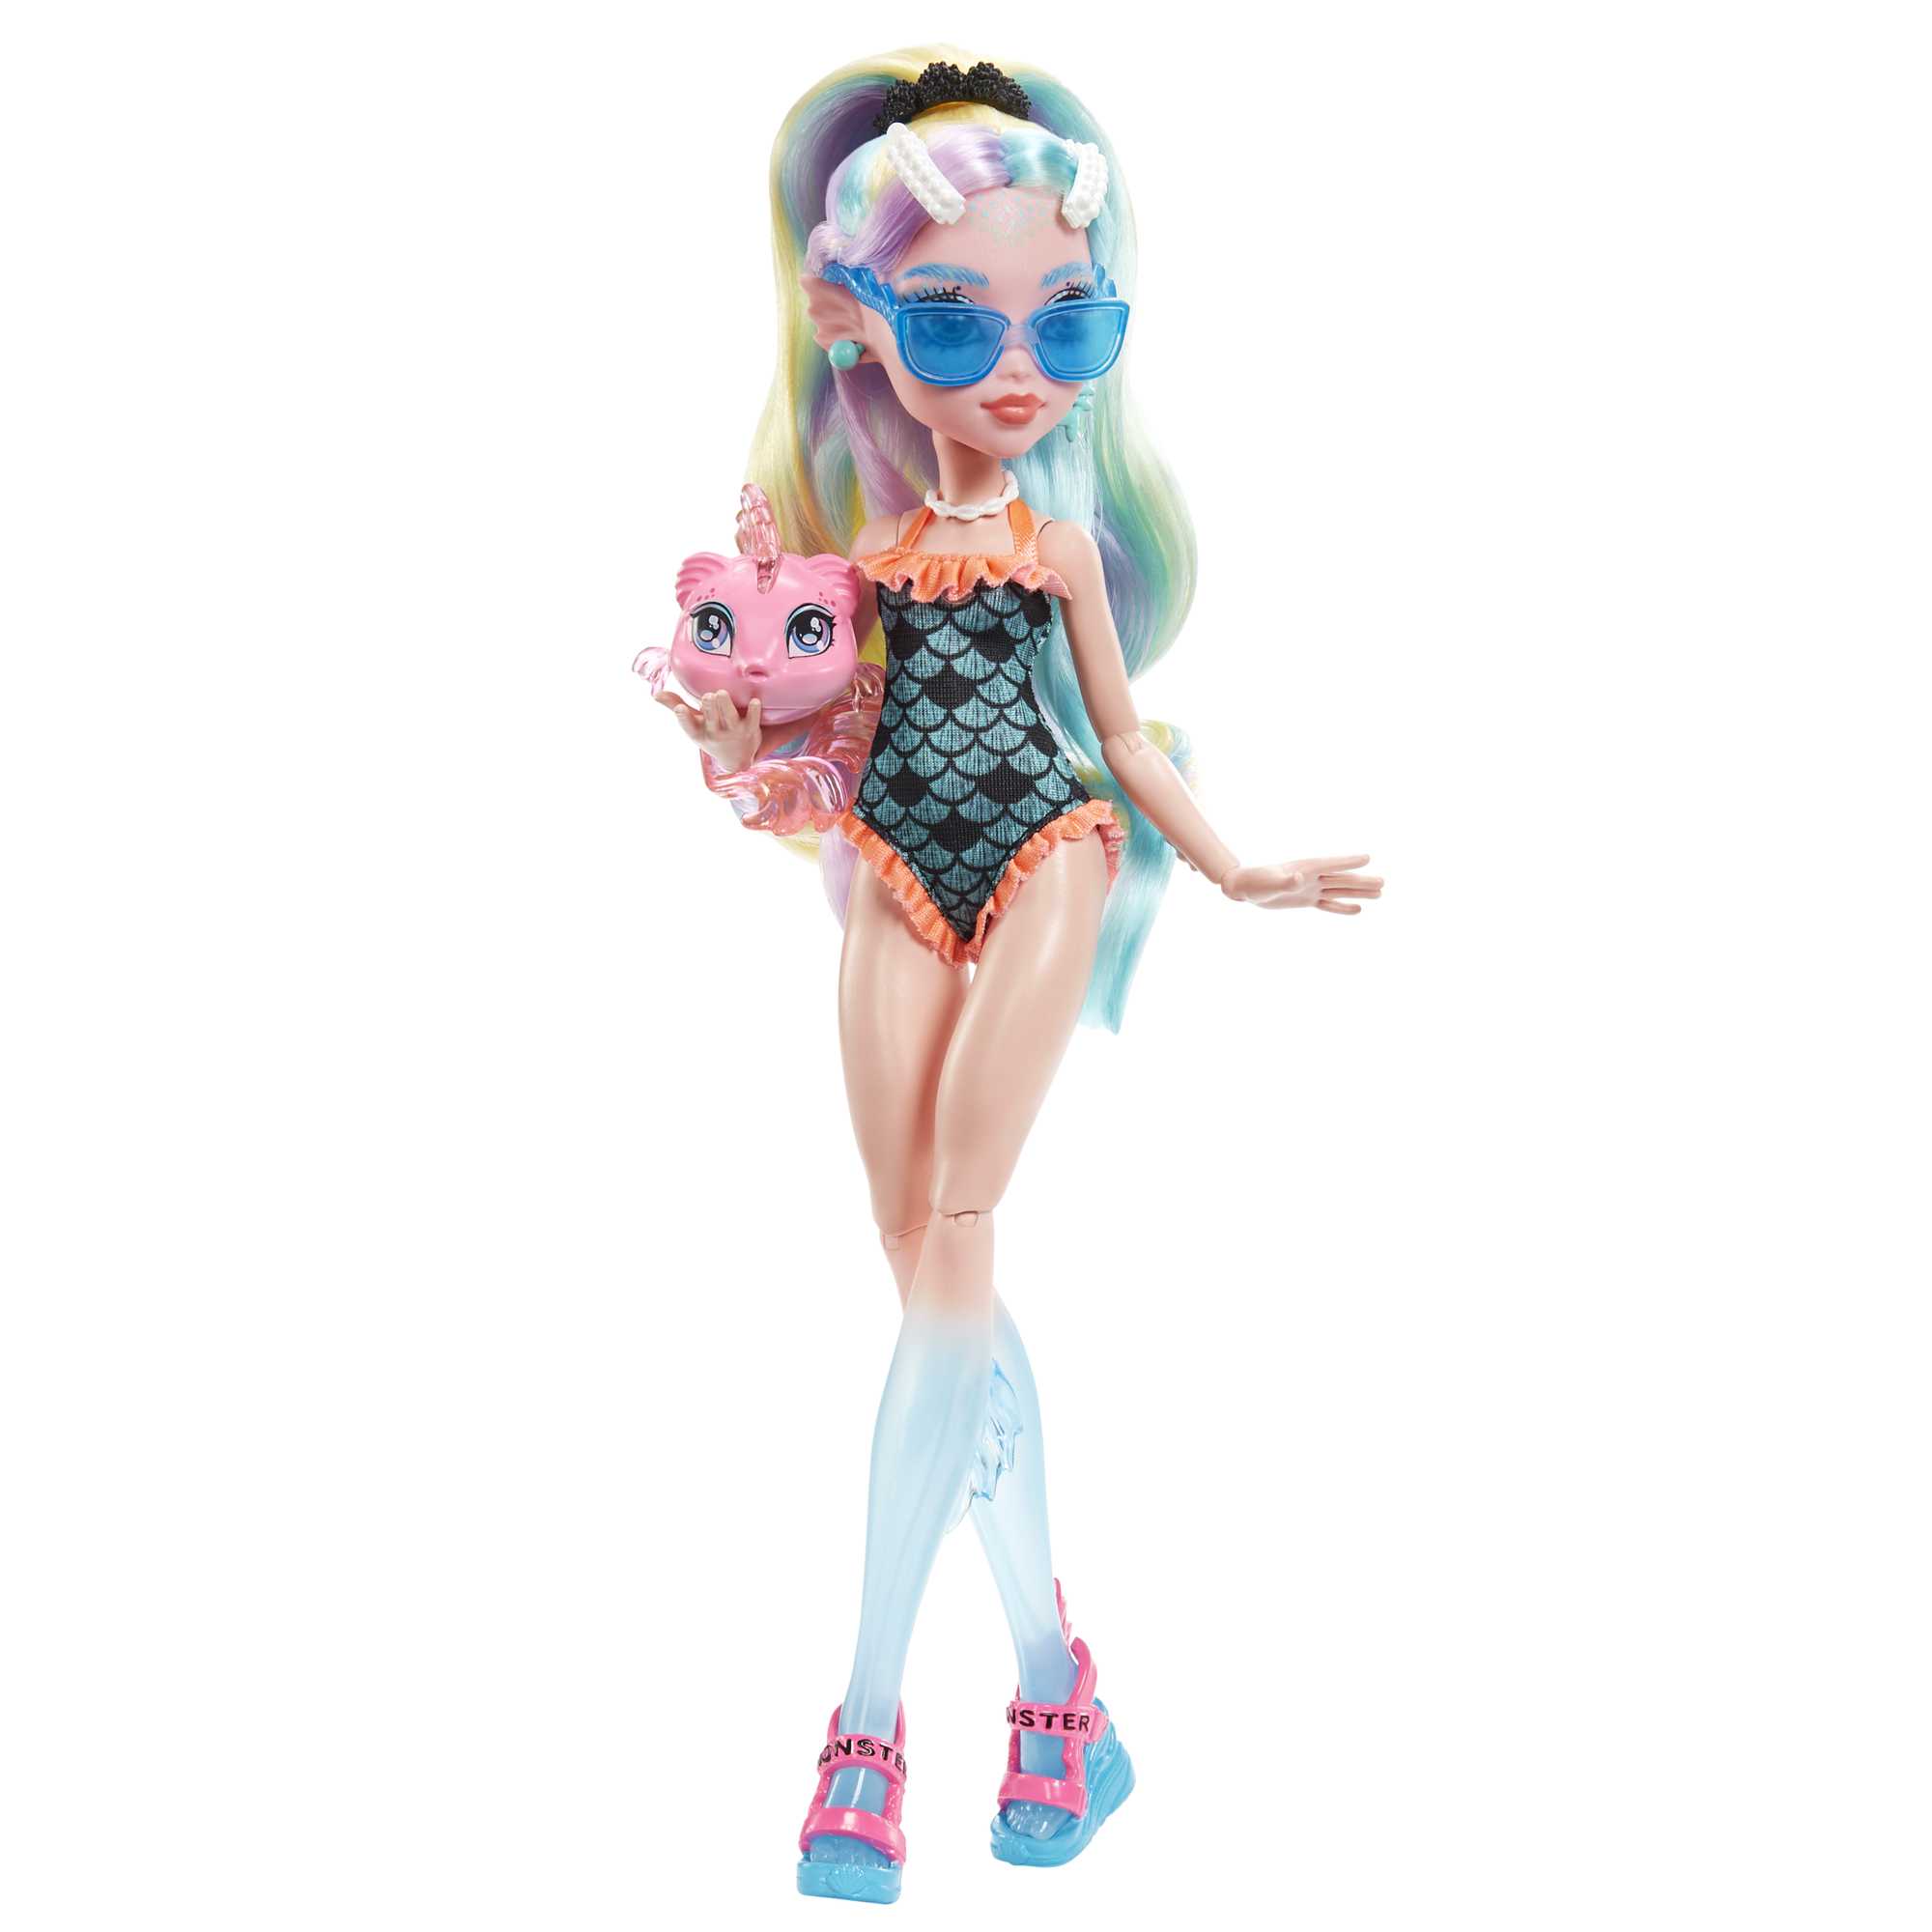 Monster High Boneca Lagoona Blue Moda Mattel Hhk55